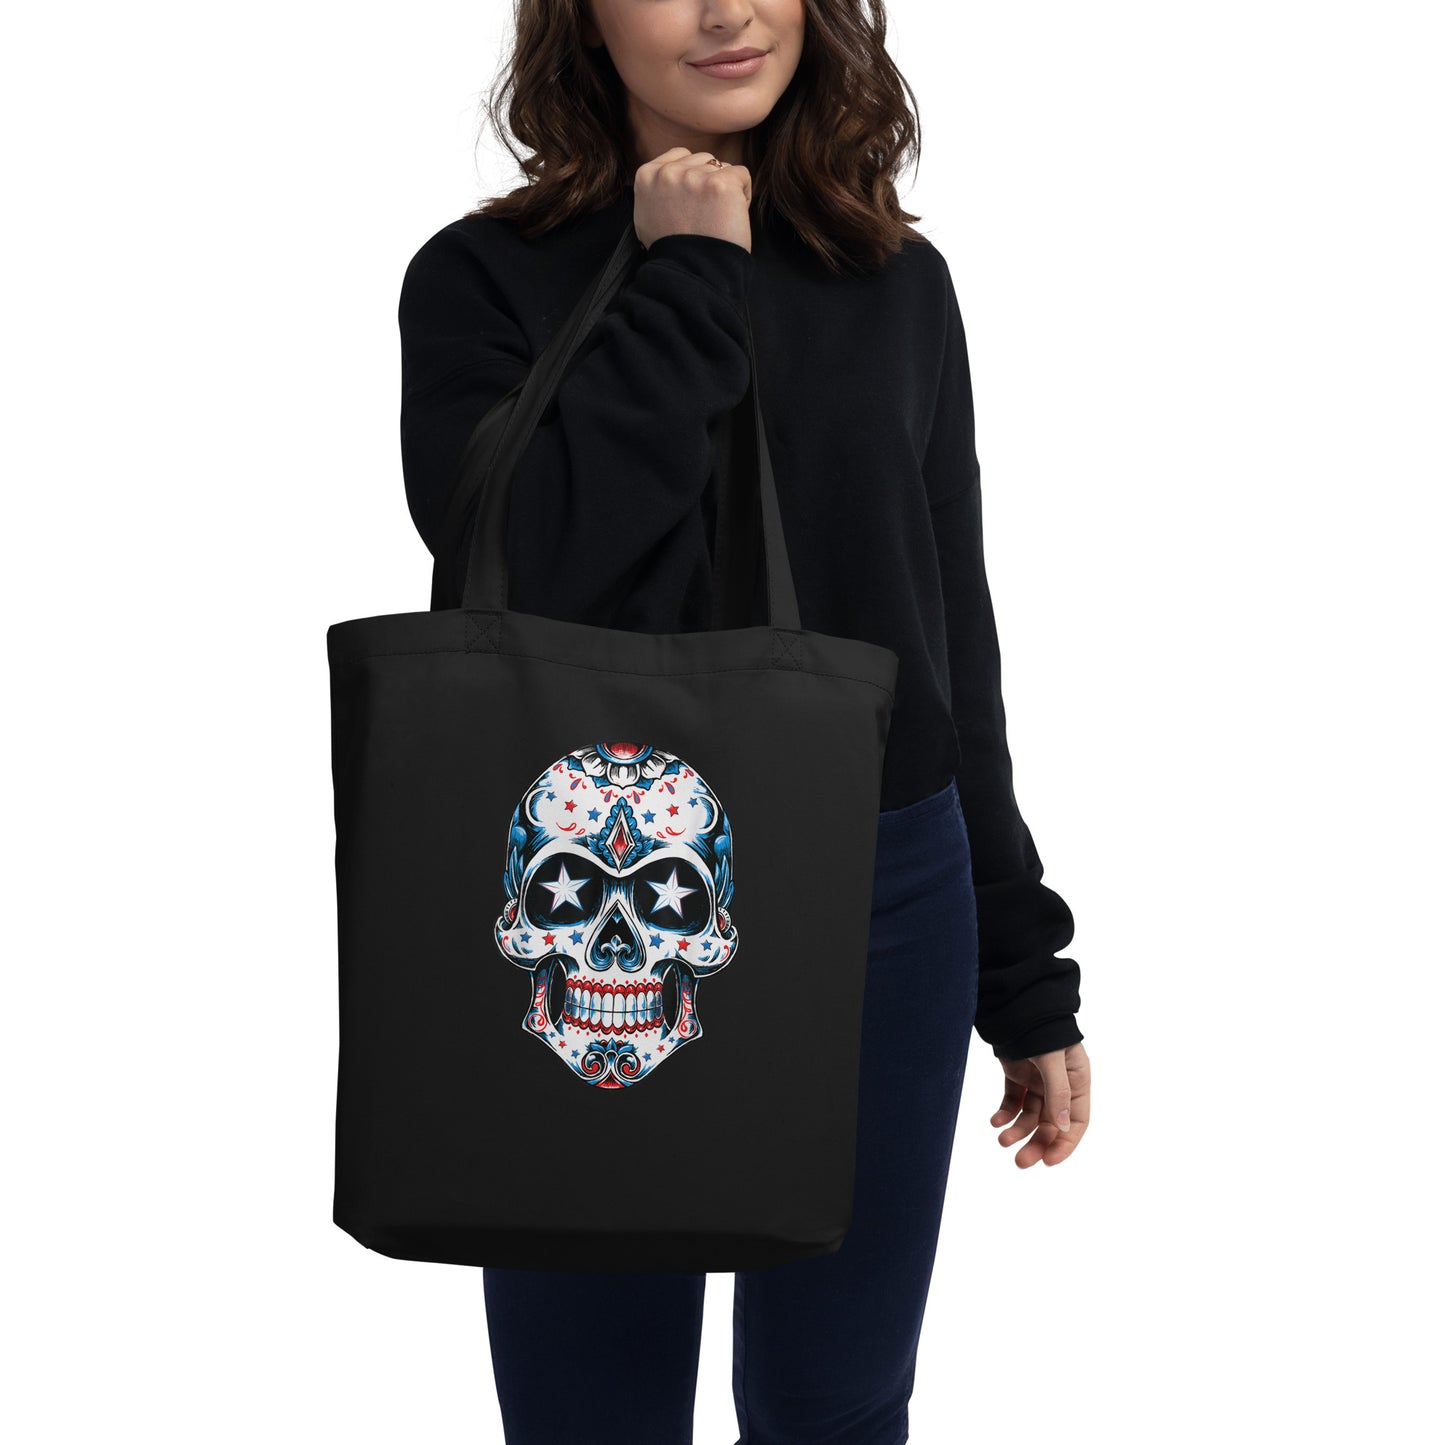 Mexicano Sugar Skull Organic Tote Bag